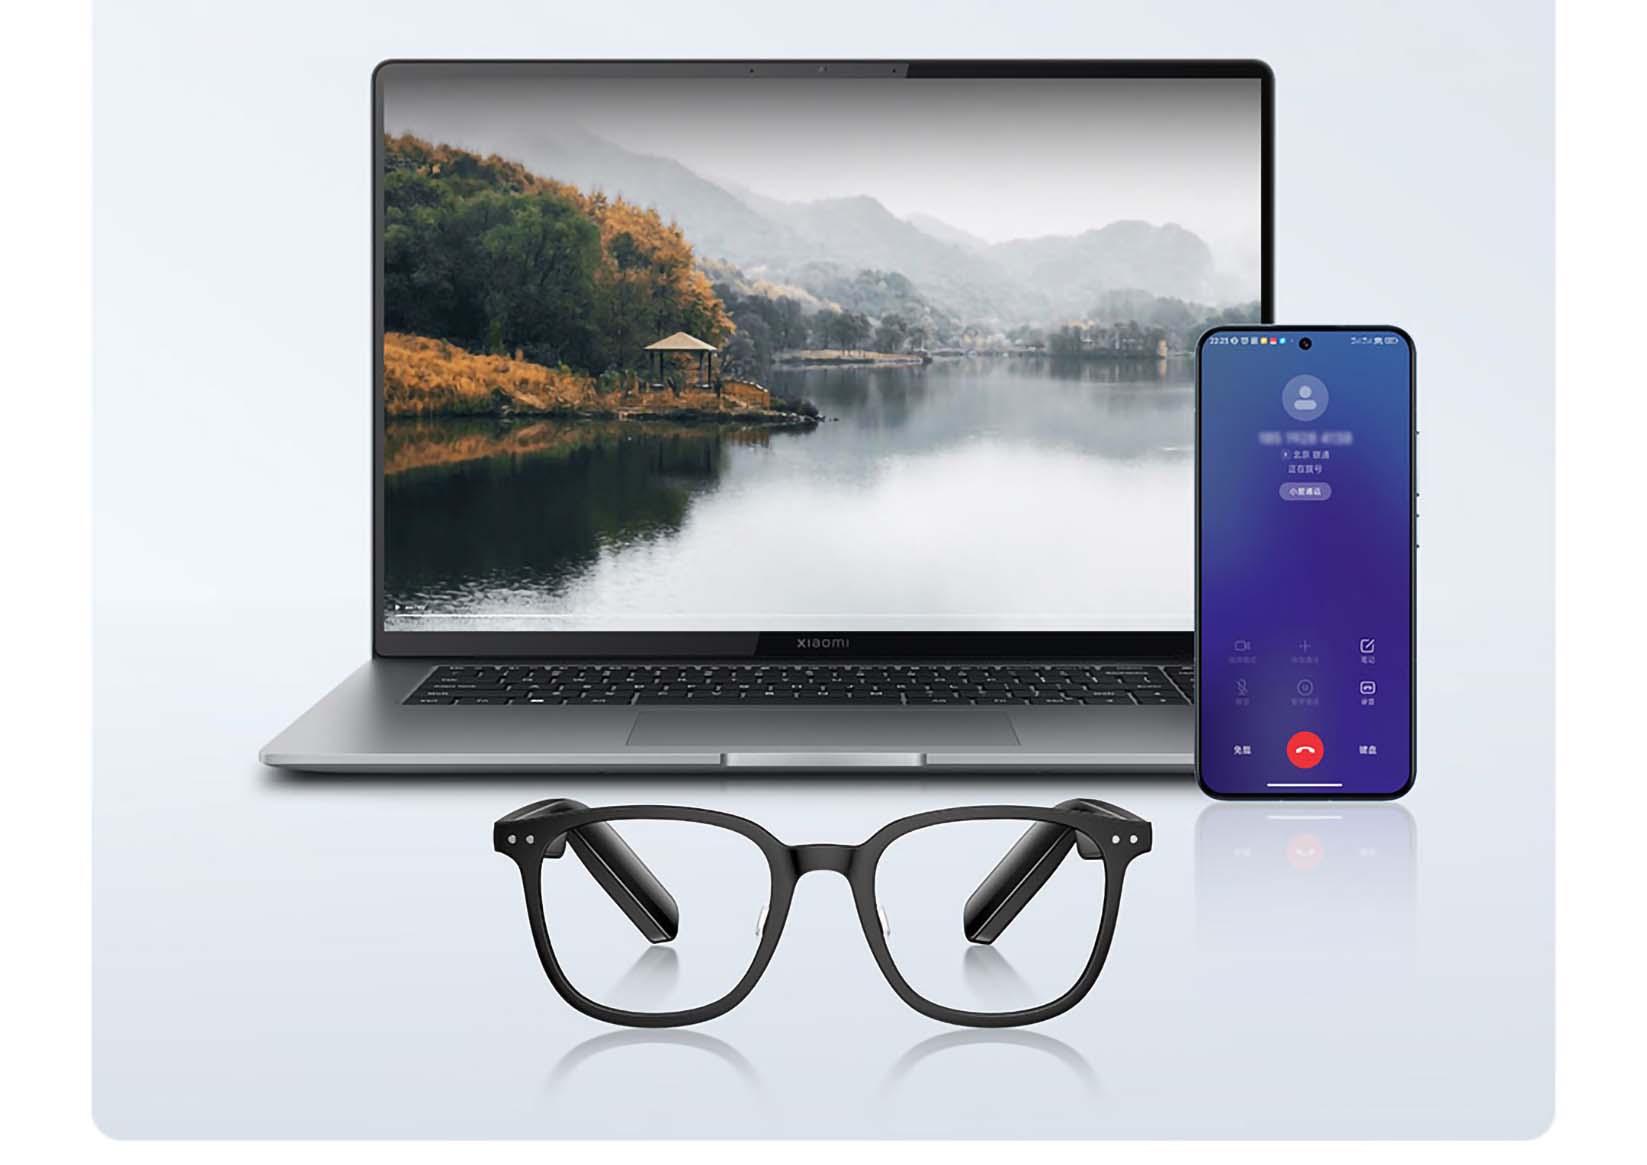 Mijia Smart Audio Glasses